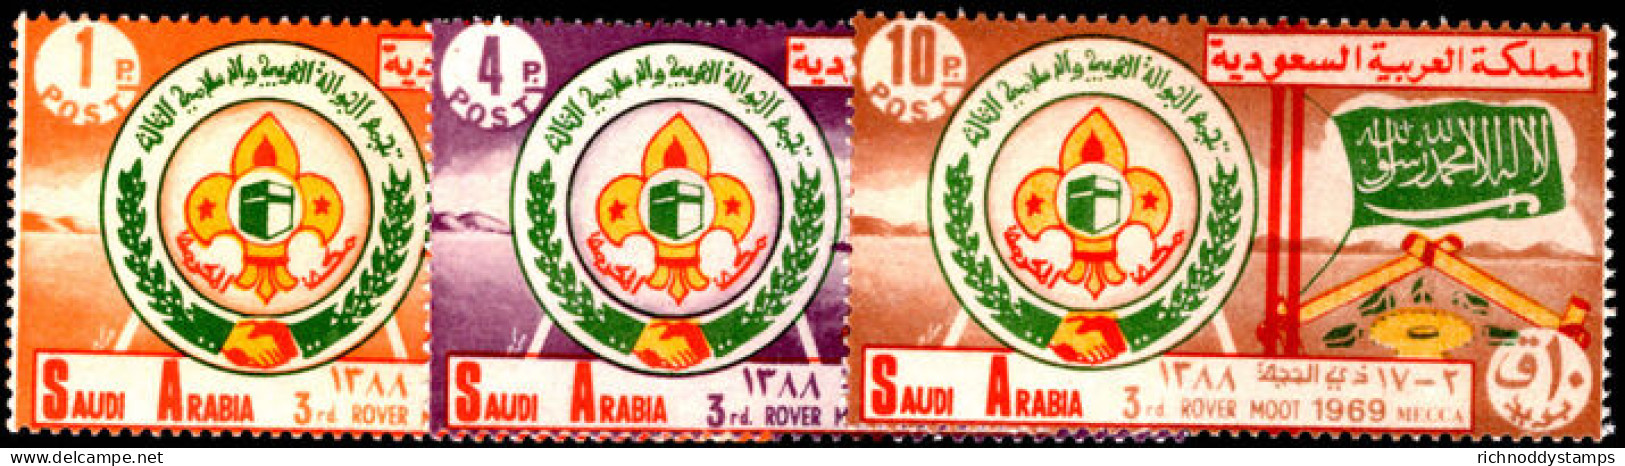 Saudi Arabia 1969 Third Arab Rover Moot Lightly Mounted Mint. - Saudi Arabia